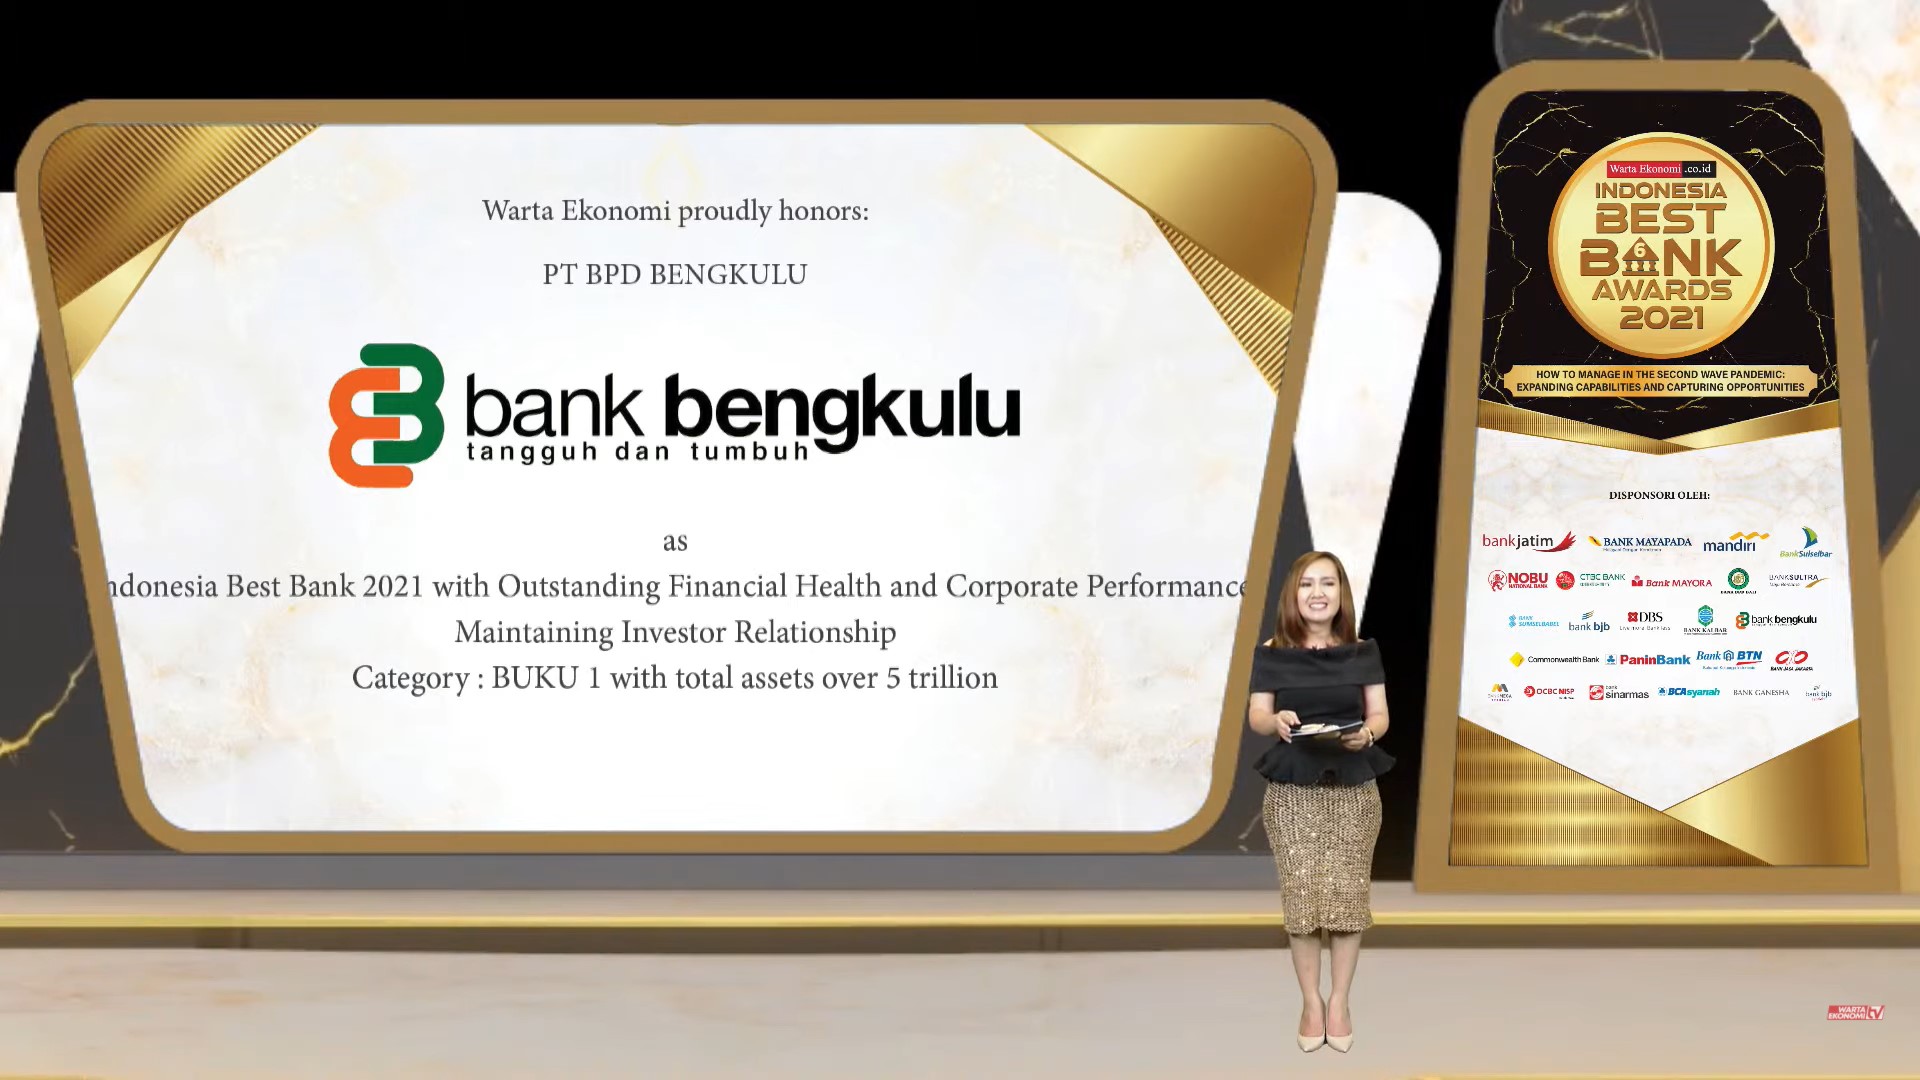 Bank Bengkulu Meraih Penghargaan "Indonesia Best Bank Awards 2021"